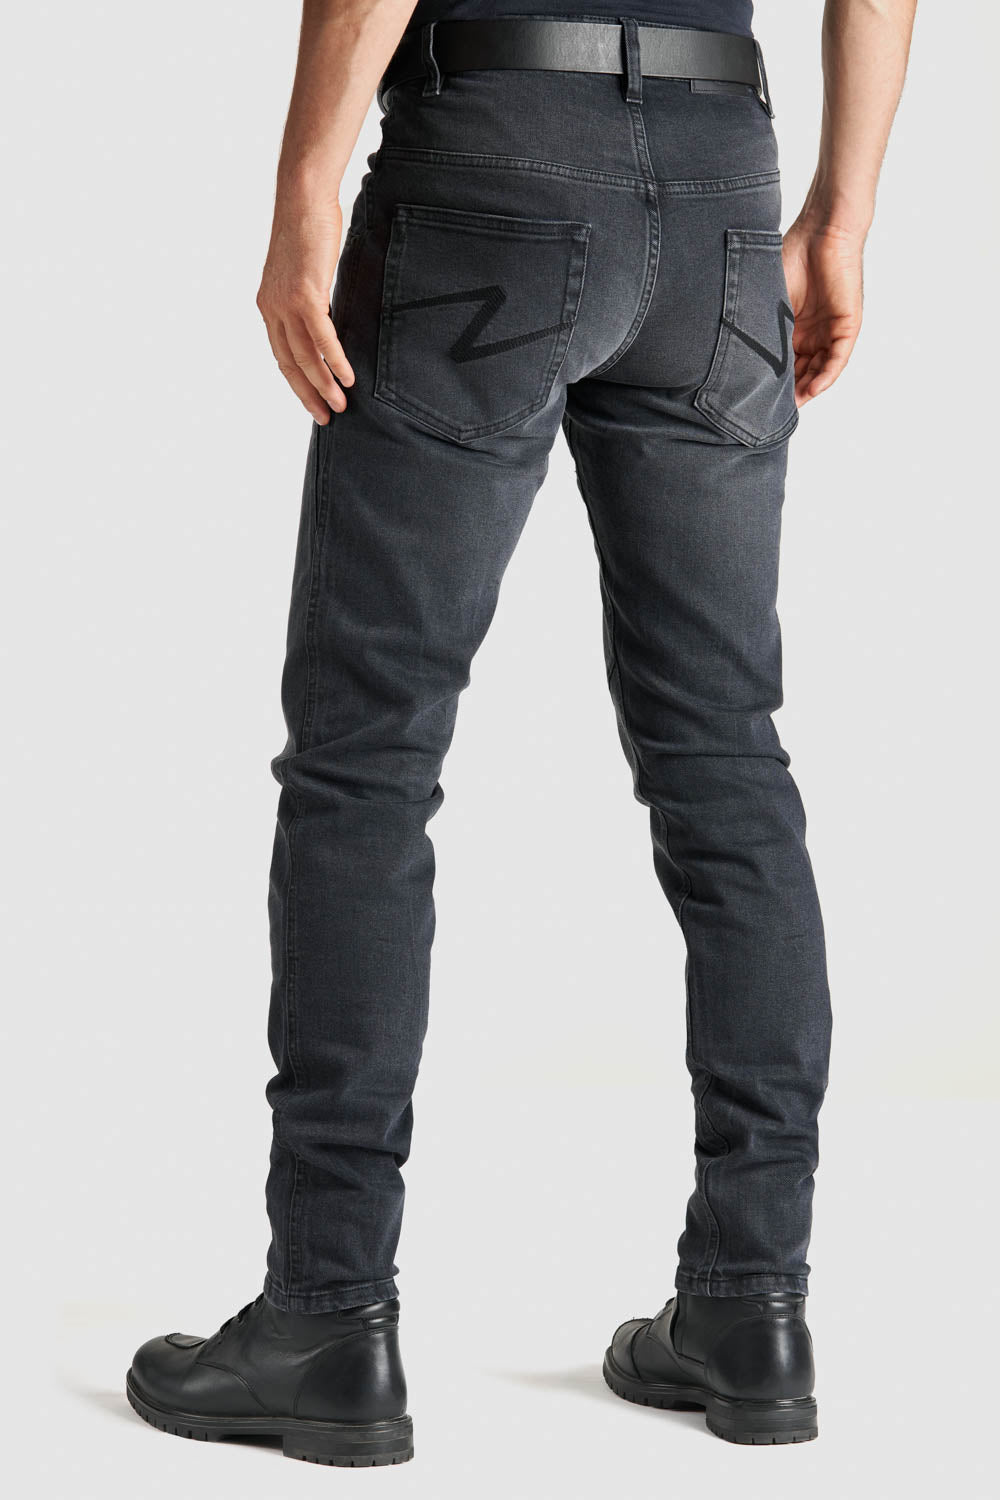 Pando Moto Robby SLIM Black Casual Jeans, Length 30